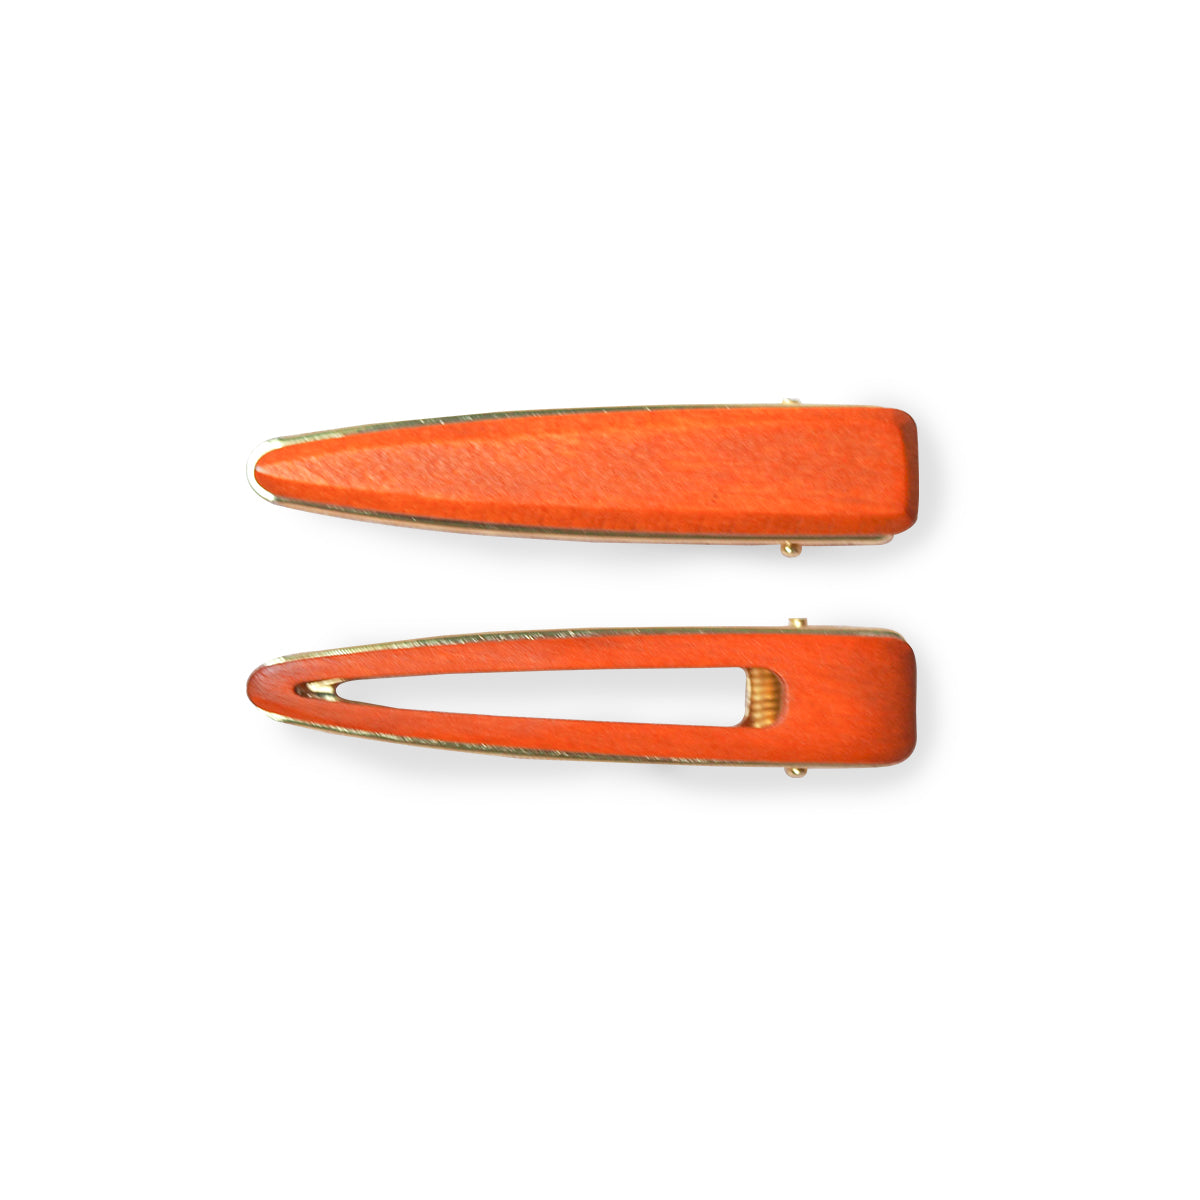 2 zero waste orange hair clips. Wooden with a metallic clip. On a white background.